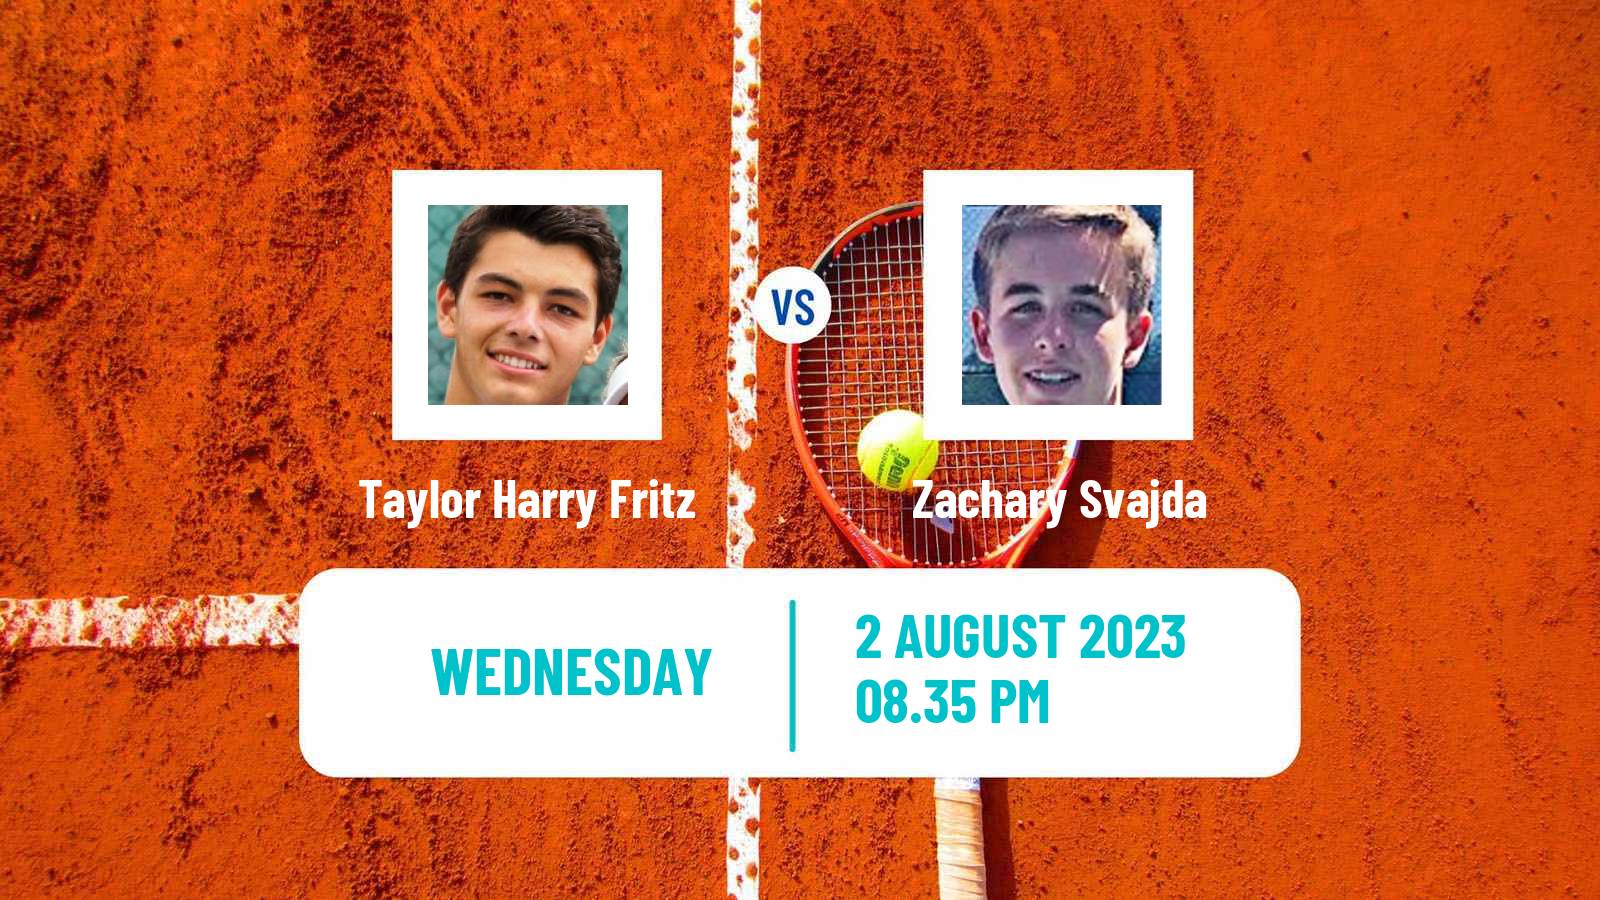 Tennis ATP Washington Taylor Harry Fritz - Zachary Svajda